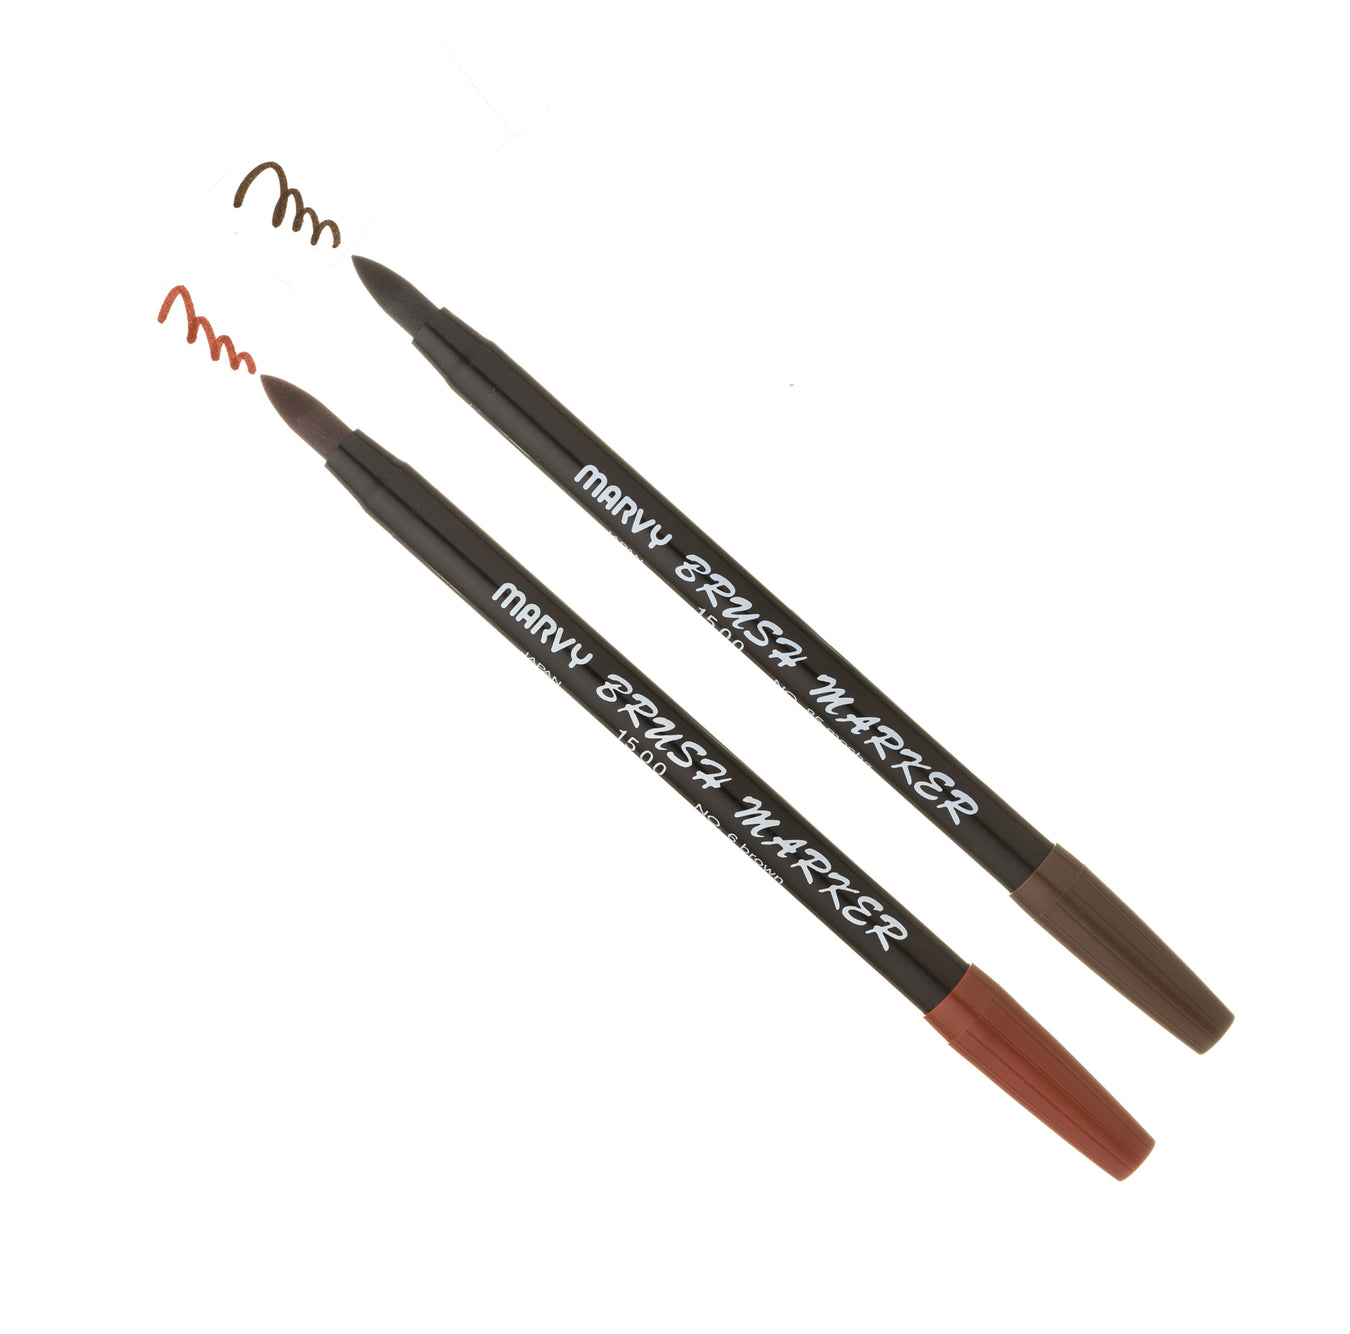 manrojoytion Marvy Uchida Color in Watercolor Twist Colored Pencils 24ct. ~ New supply:hycolakegal